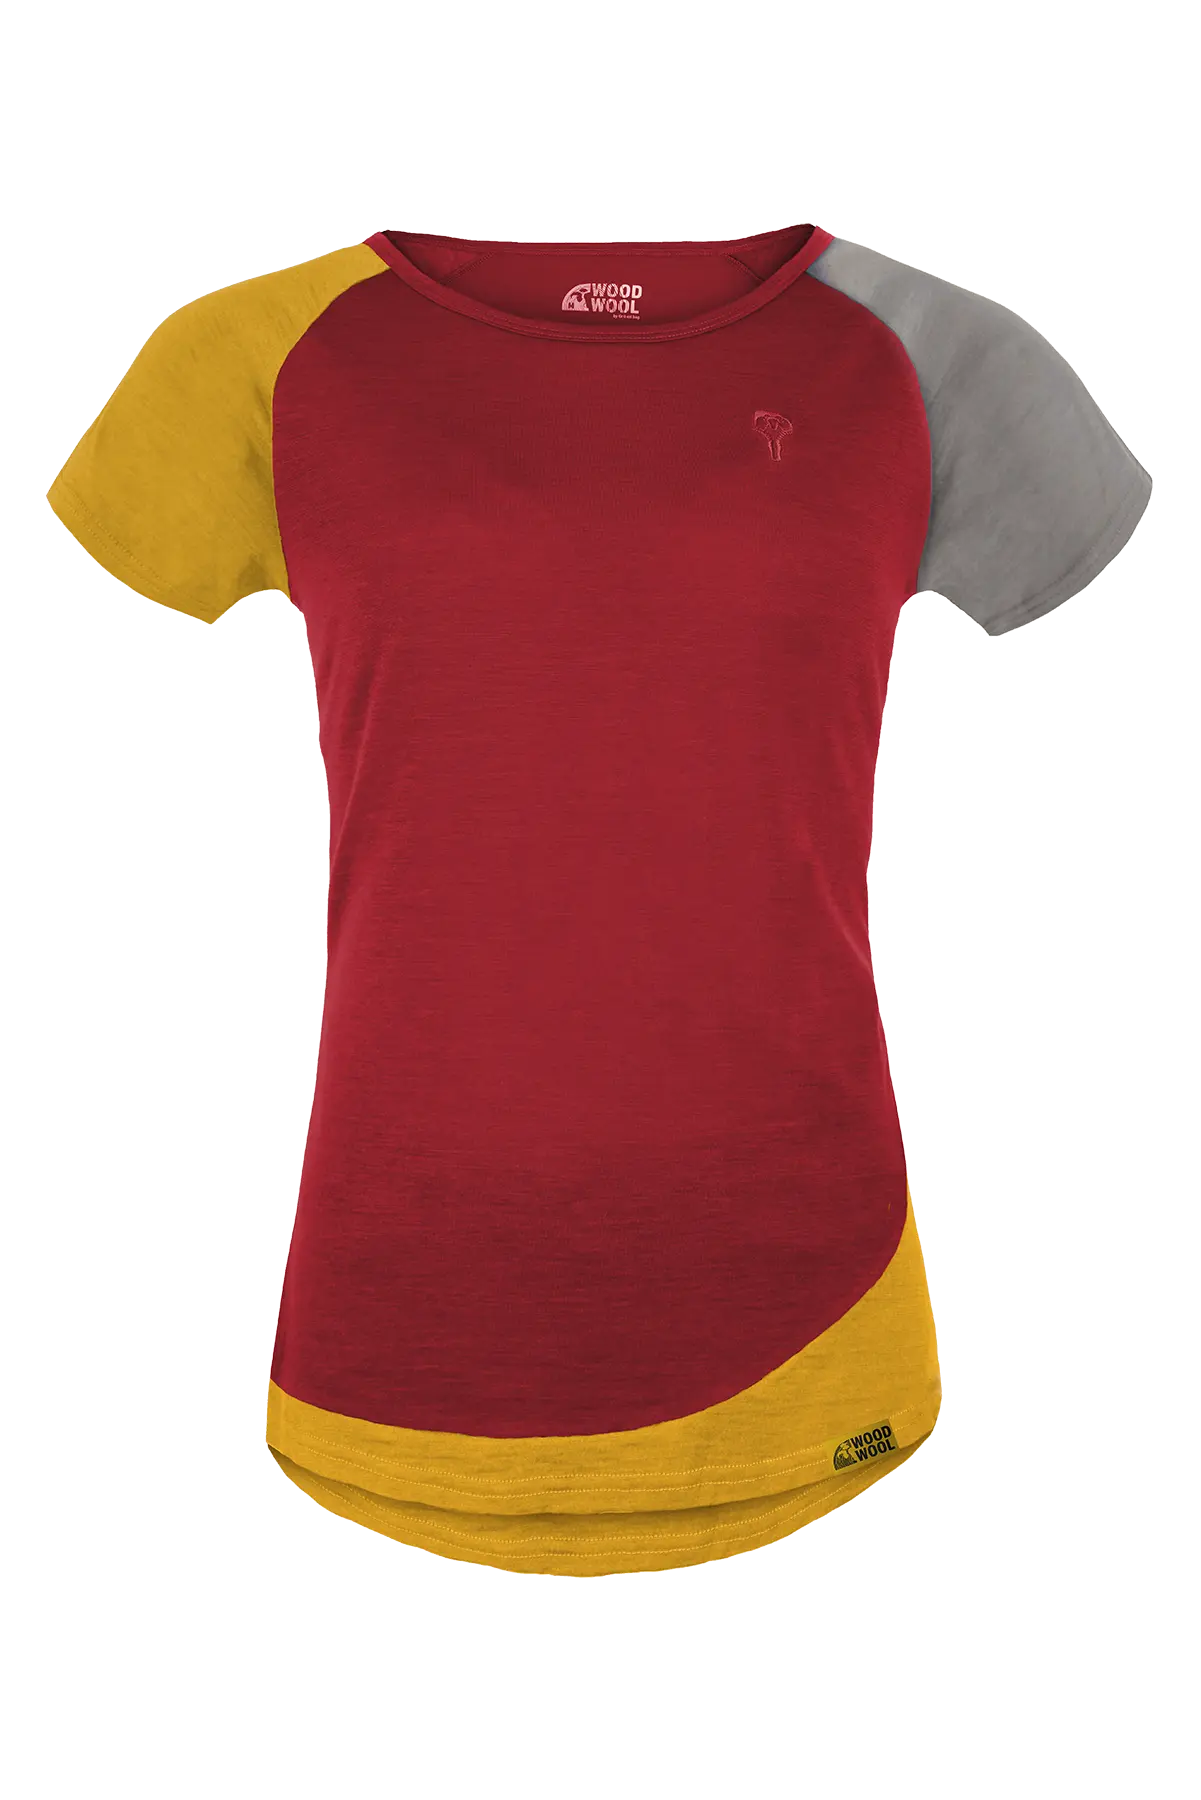 gruezi-bag-woodwool-t-shirt-lady-janeway-2210-2214-2200-5002-fired-red-brick-amainfrei Kopie